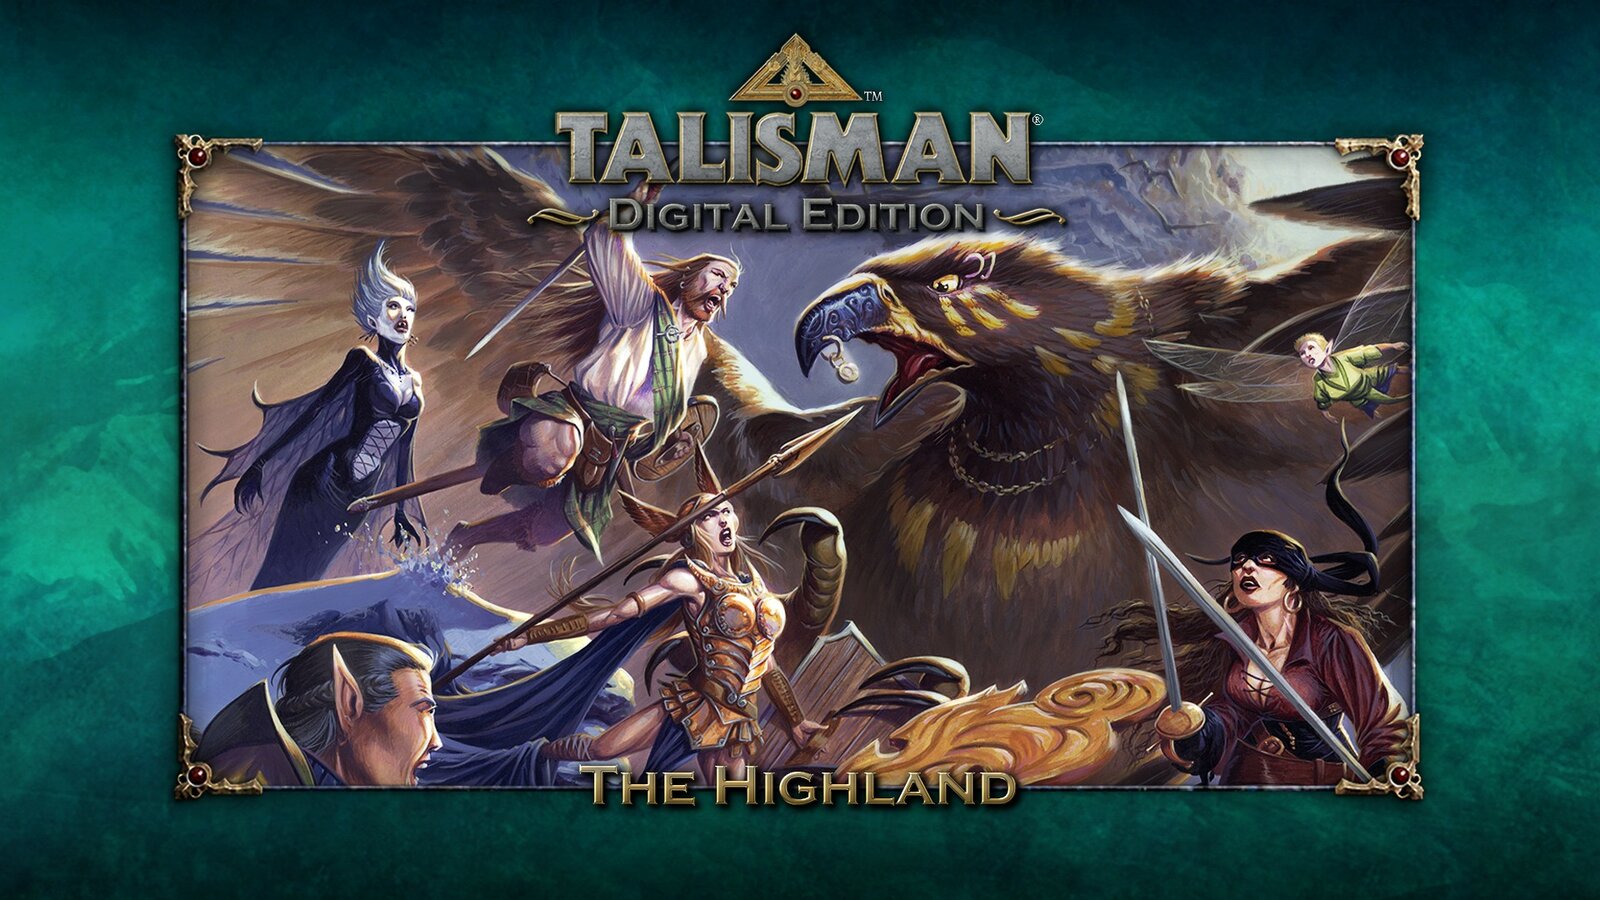 Talisman: Digital Edition - The Highland Expansion